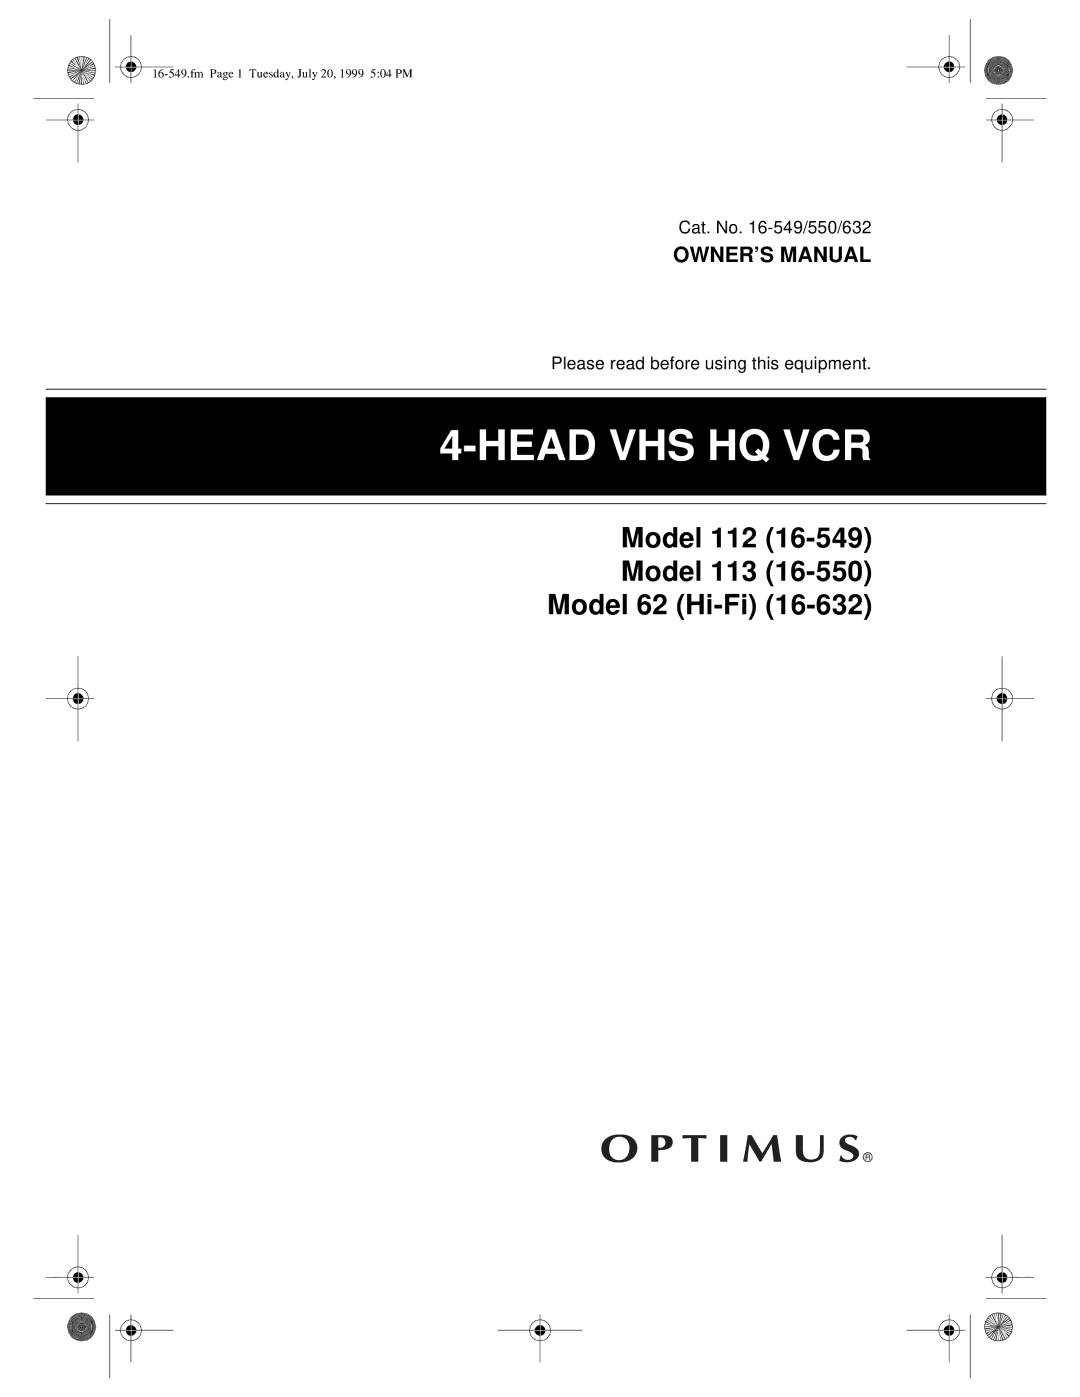 Radio Shack 62 (16-632), 112 (16-549), 113 (16-550) owner manual Head VHS HQ VCR 